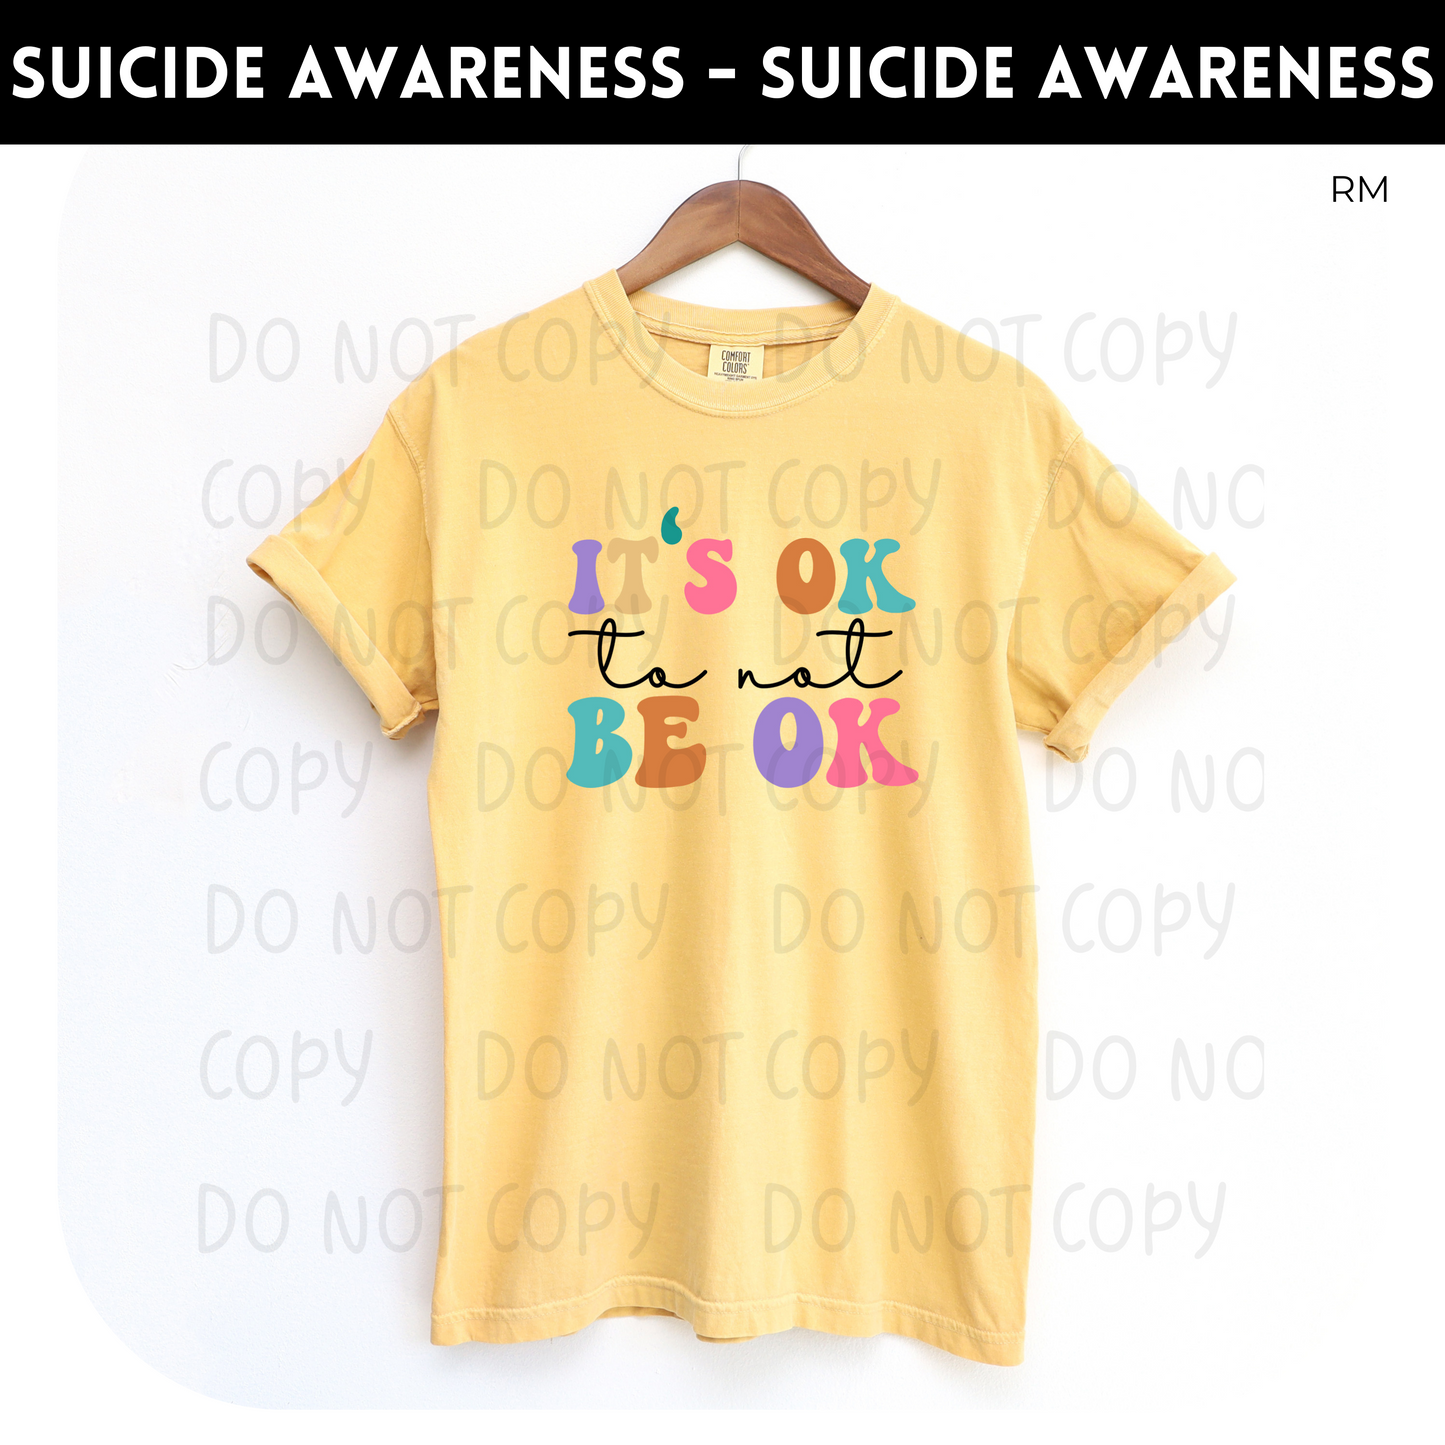 It's Okay To Not Be Okay Adult Shirt- Mental Health 92